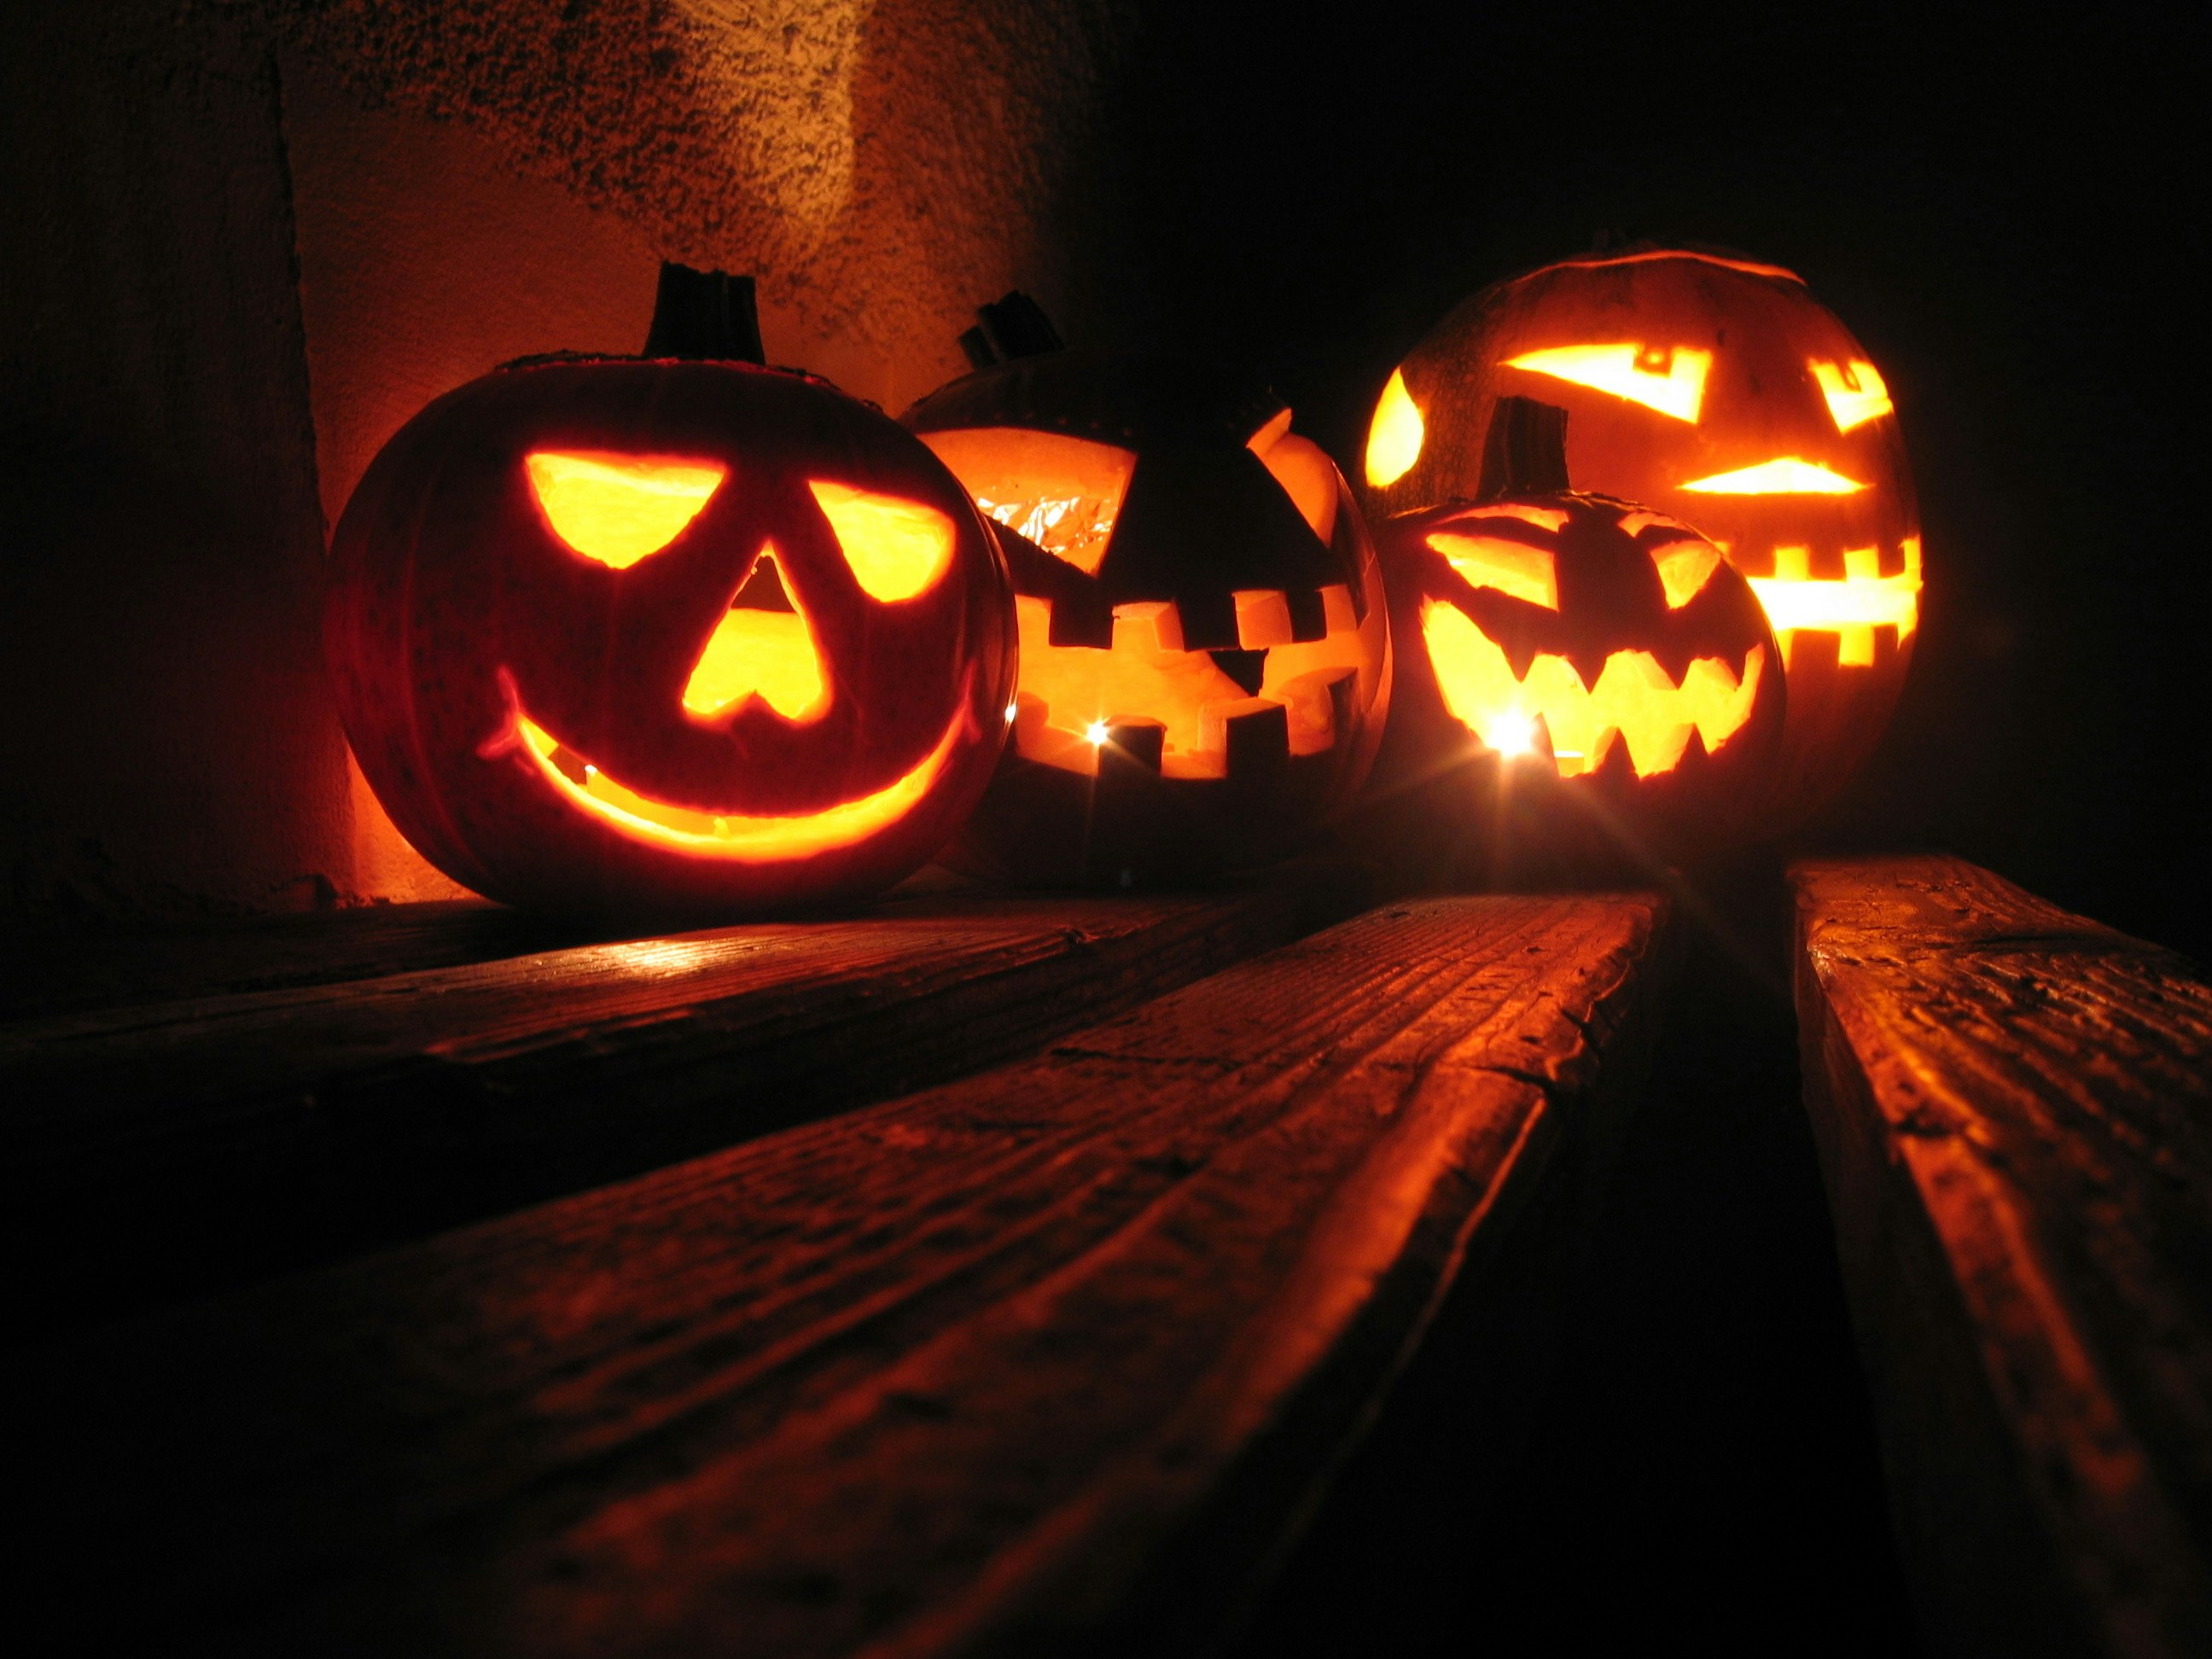 Four carved pumpkins light up a dark image.